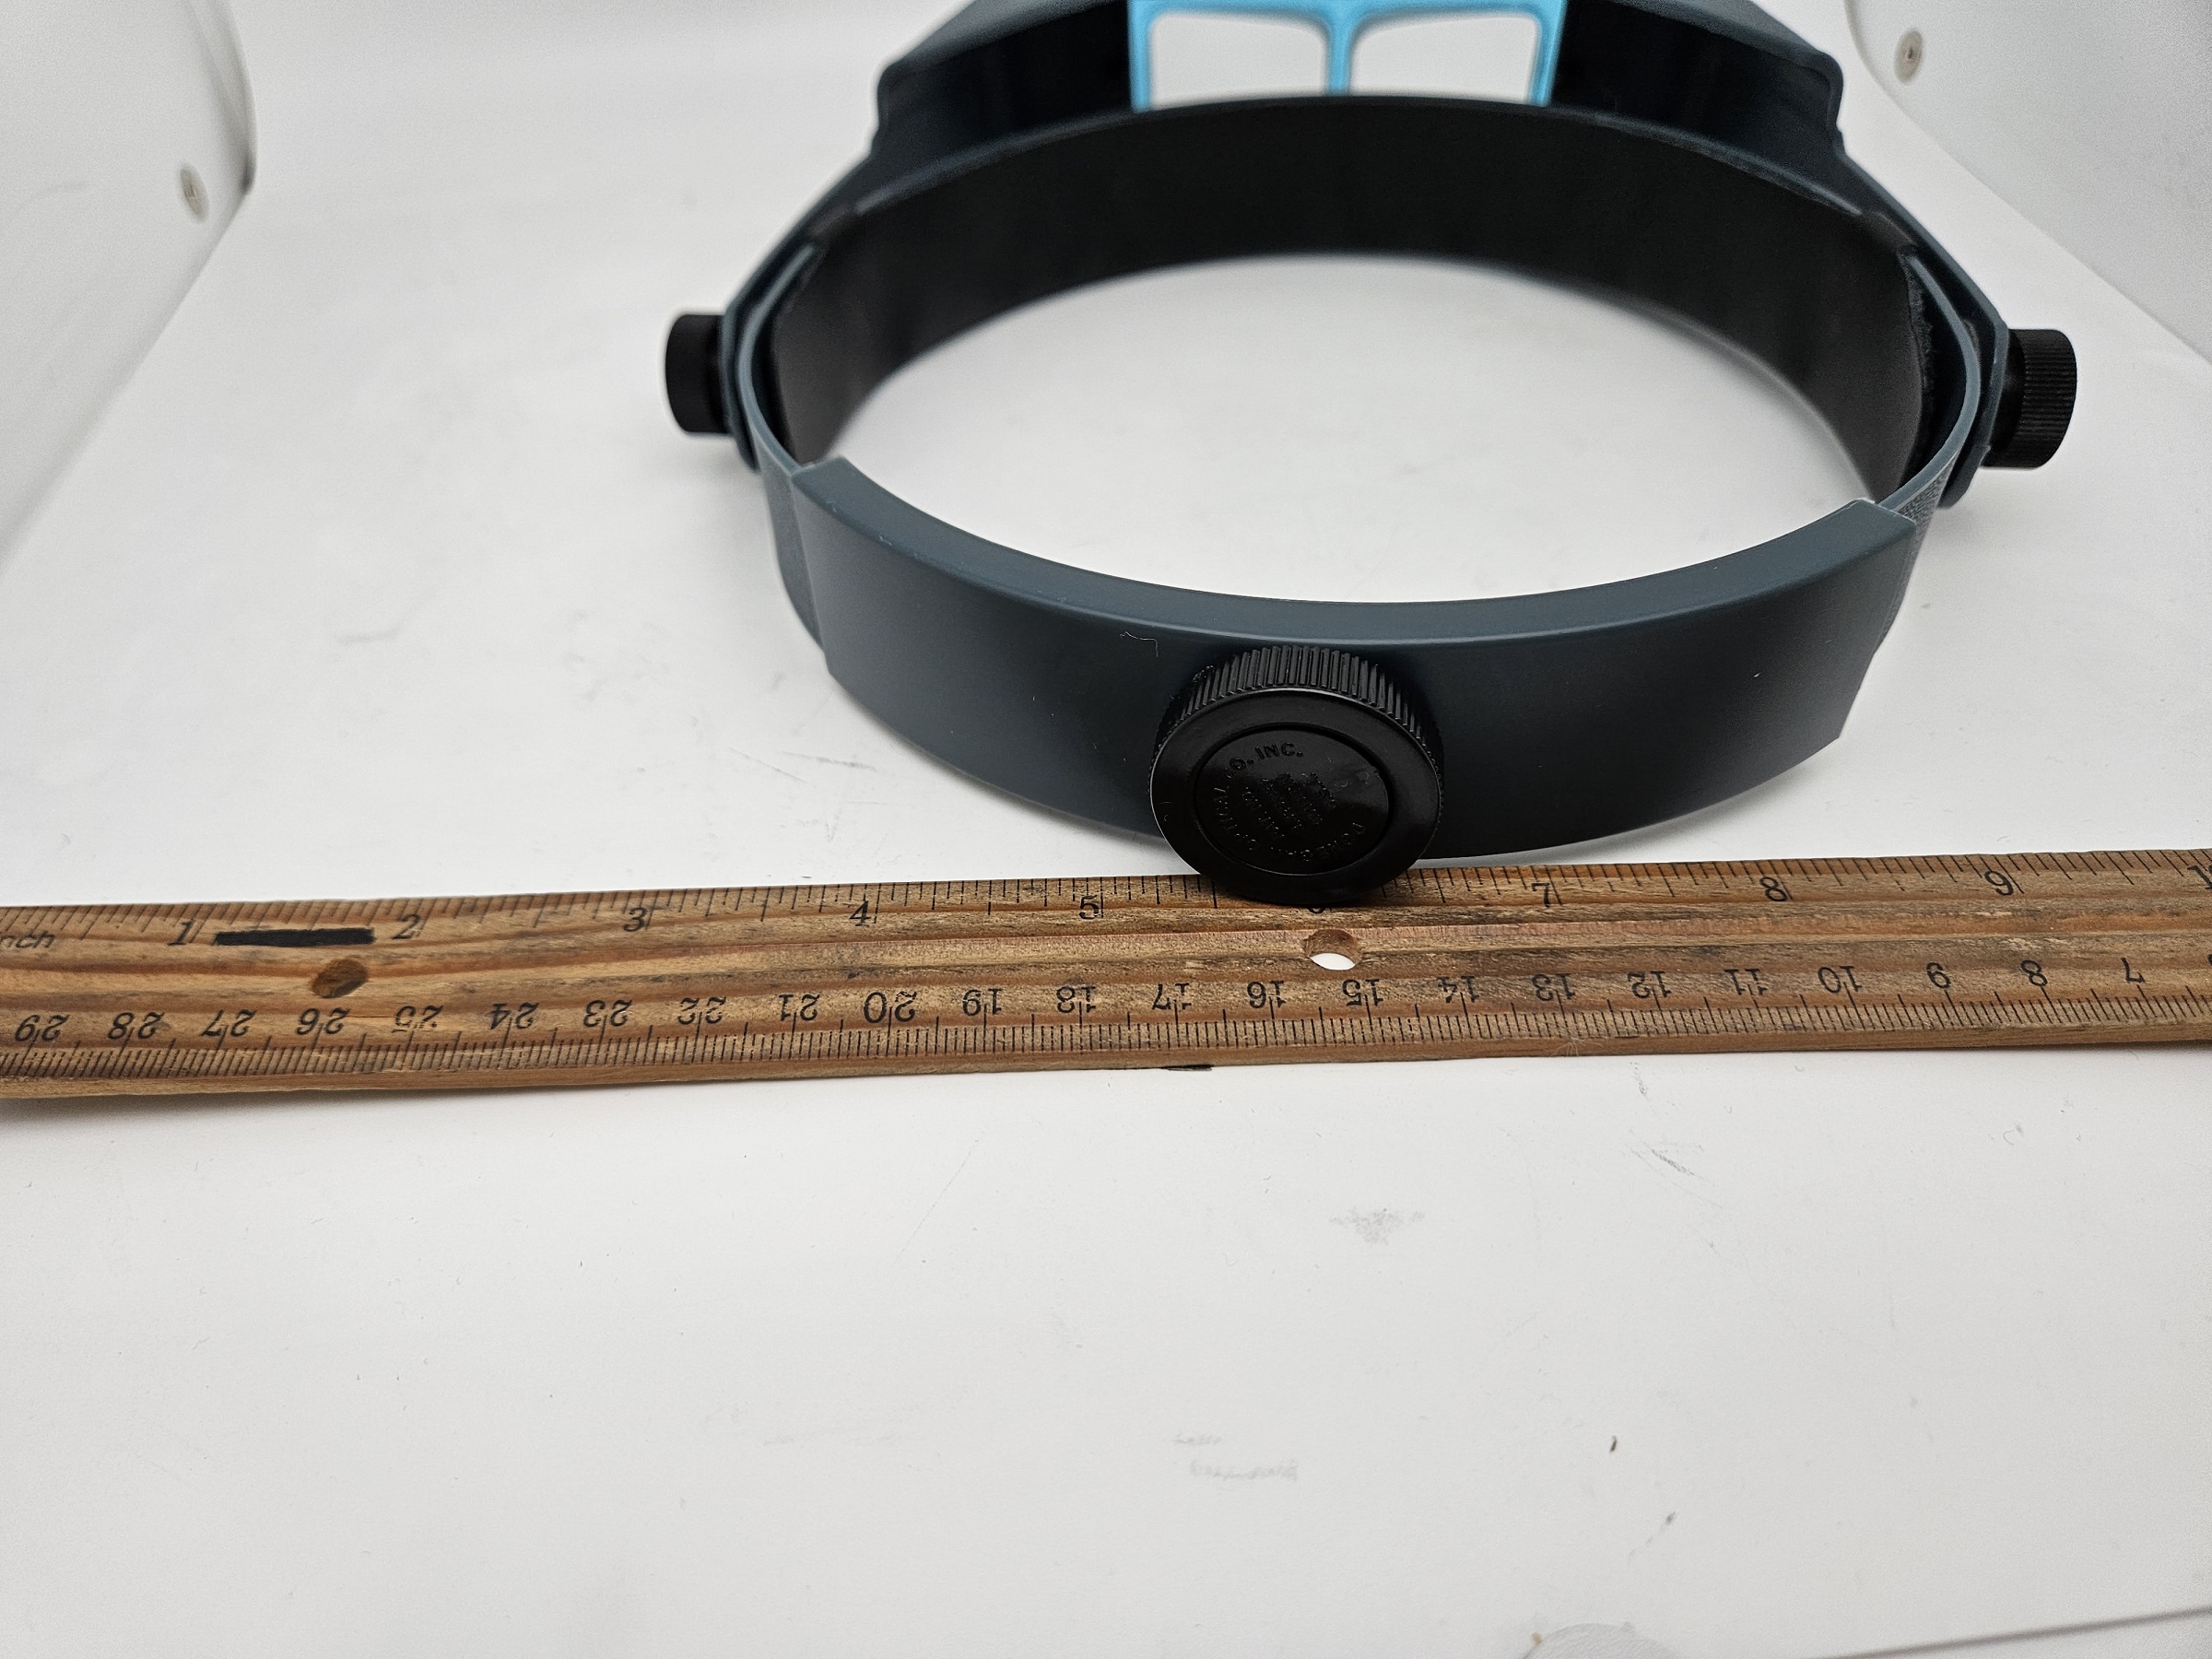 Optivisor DA-10 3.5X Head Band Handsfree Magnifier Visor